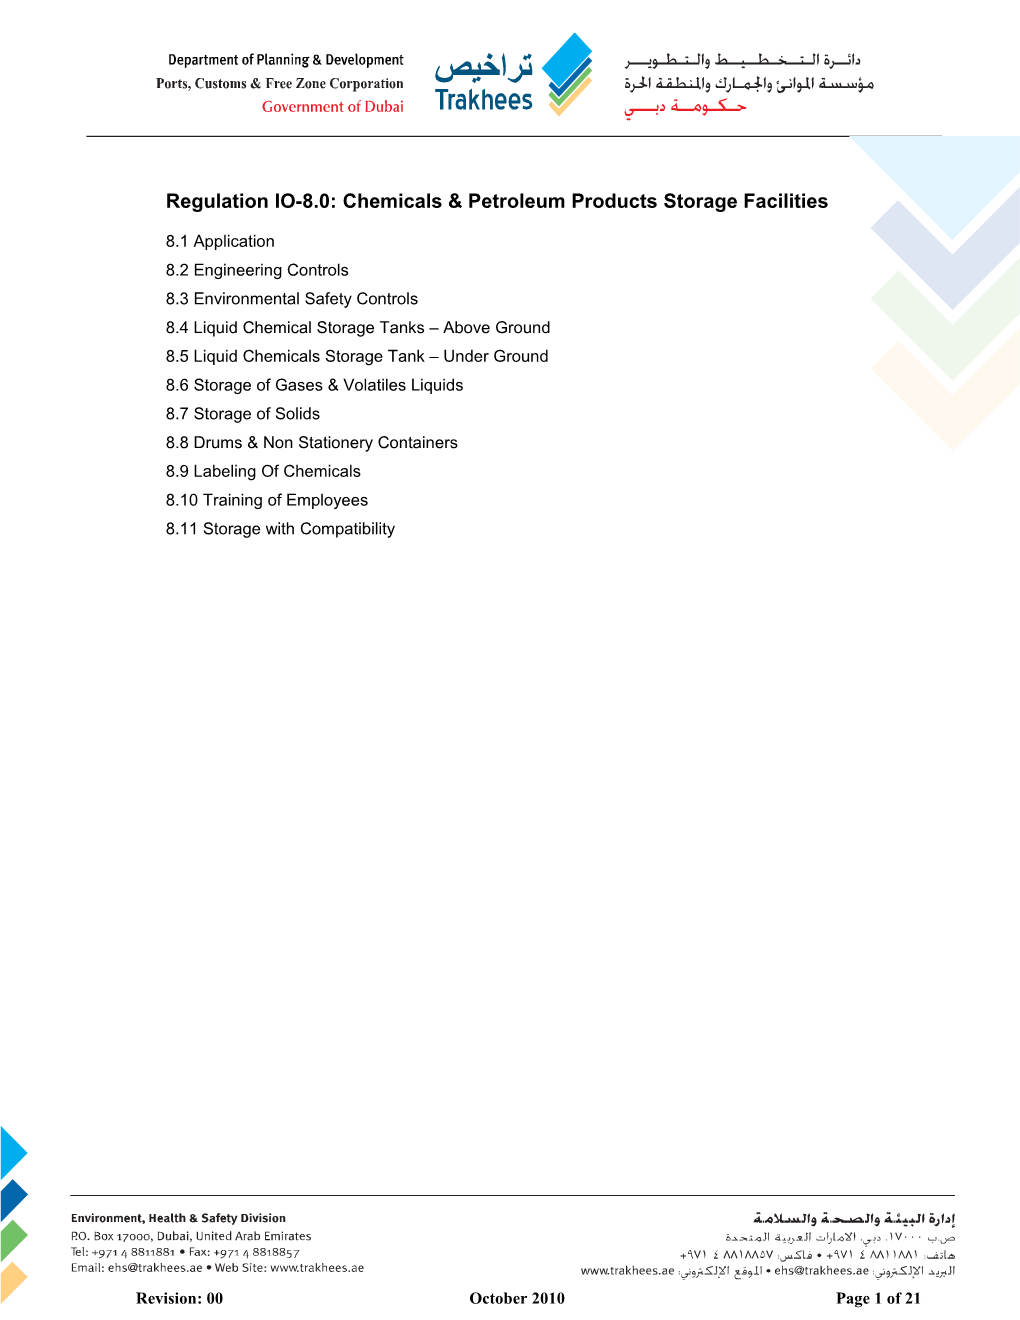 Regulation IO- 8.0 Chemicals & Petroleum Products Storage Facilities